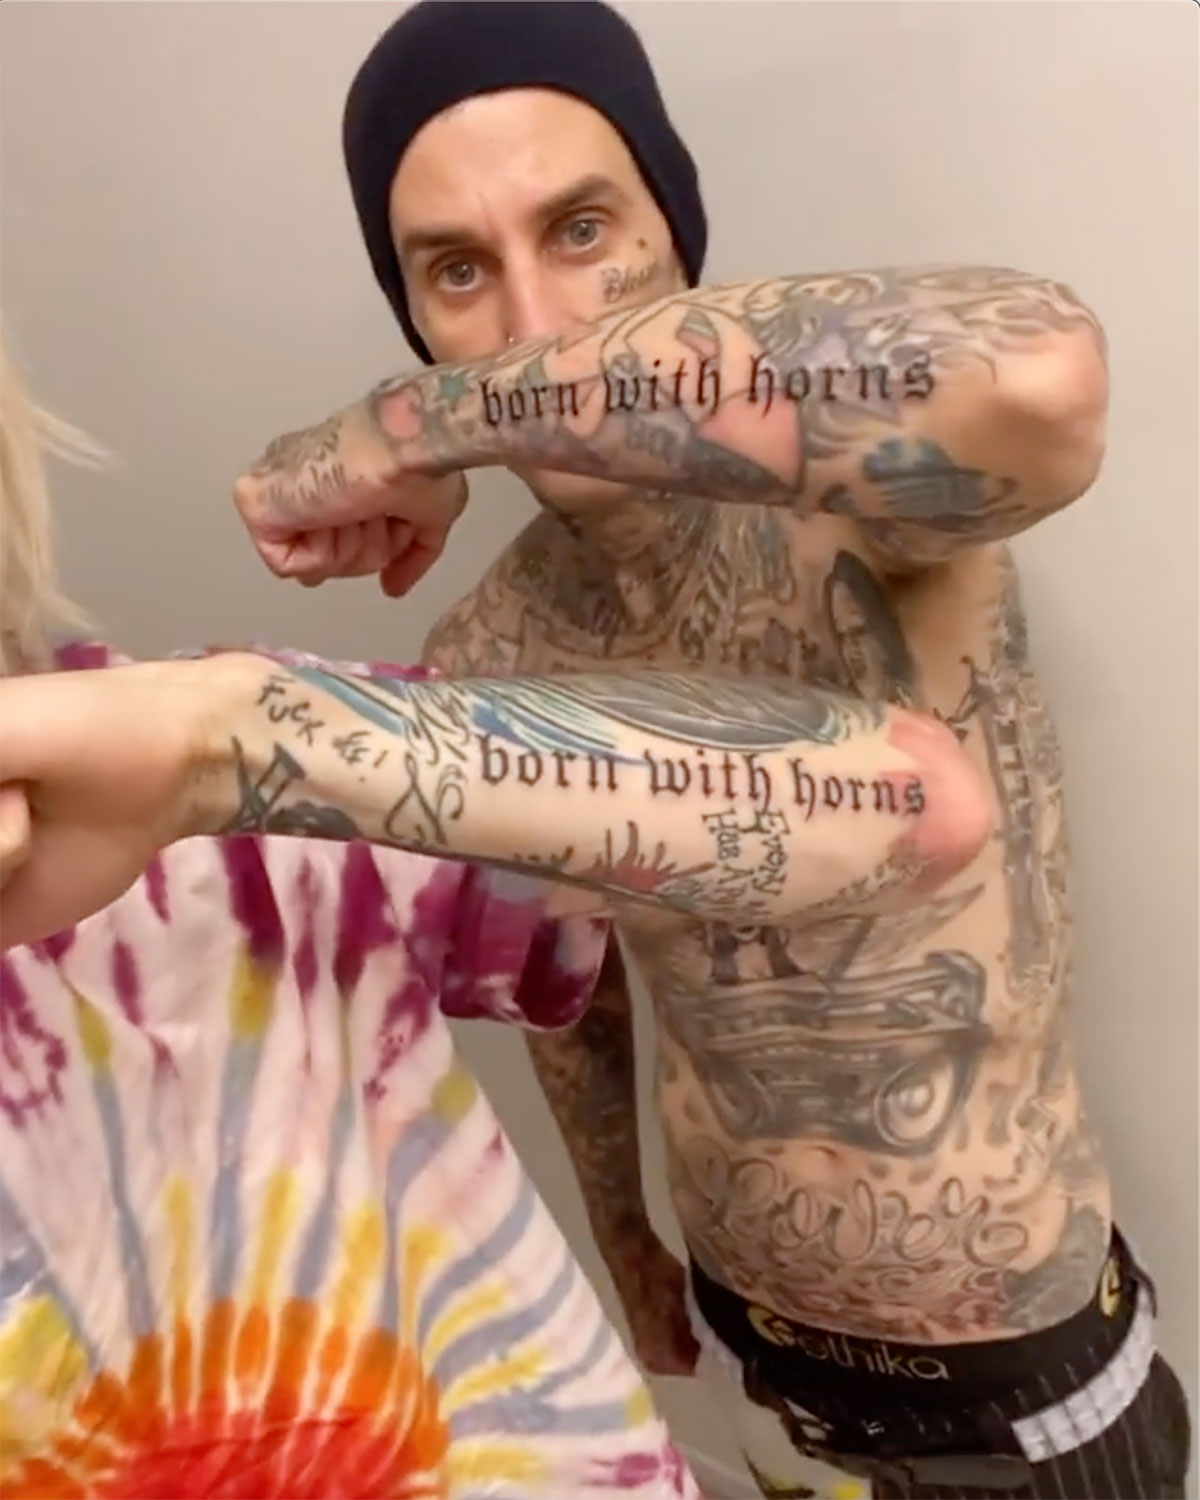 Machine Gun Kellys Tattoos and Their Meanings  POPSUGAR Beauty